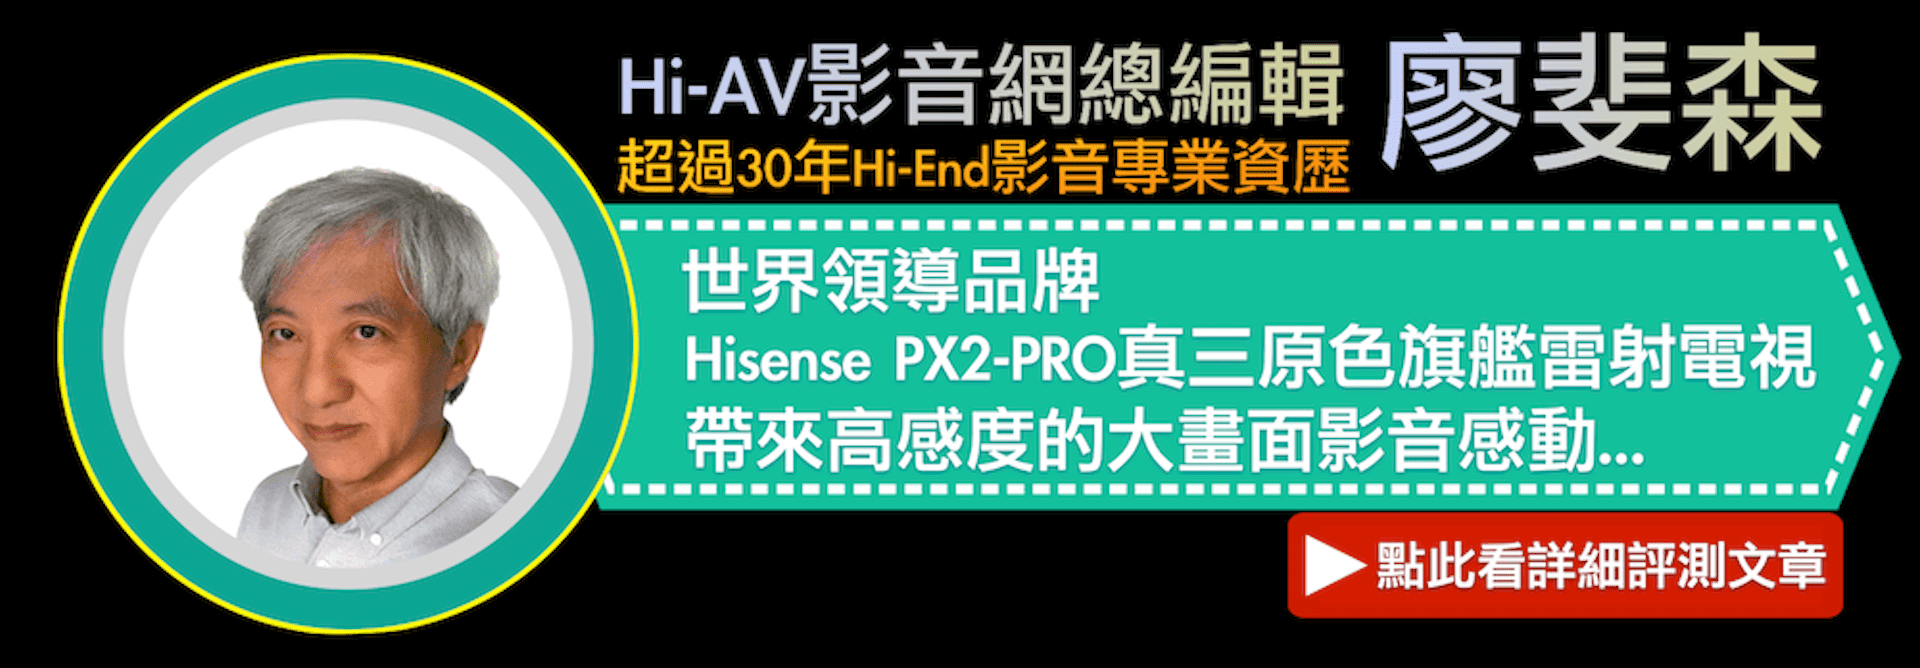 Hi-AV影音網總編輯 廖斐森超過30年Hi-End影音專業資歷世界領導品牌Hisense PX2-PRO真三原色旗艦雷射電視帶來高感度的大畫面影音感動點此看詳細評測文章